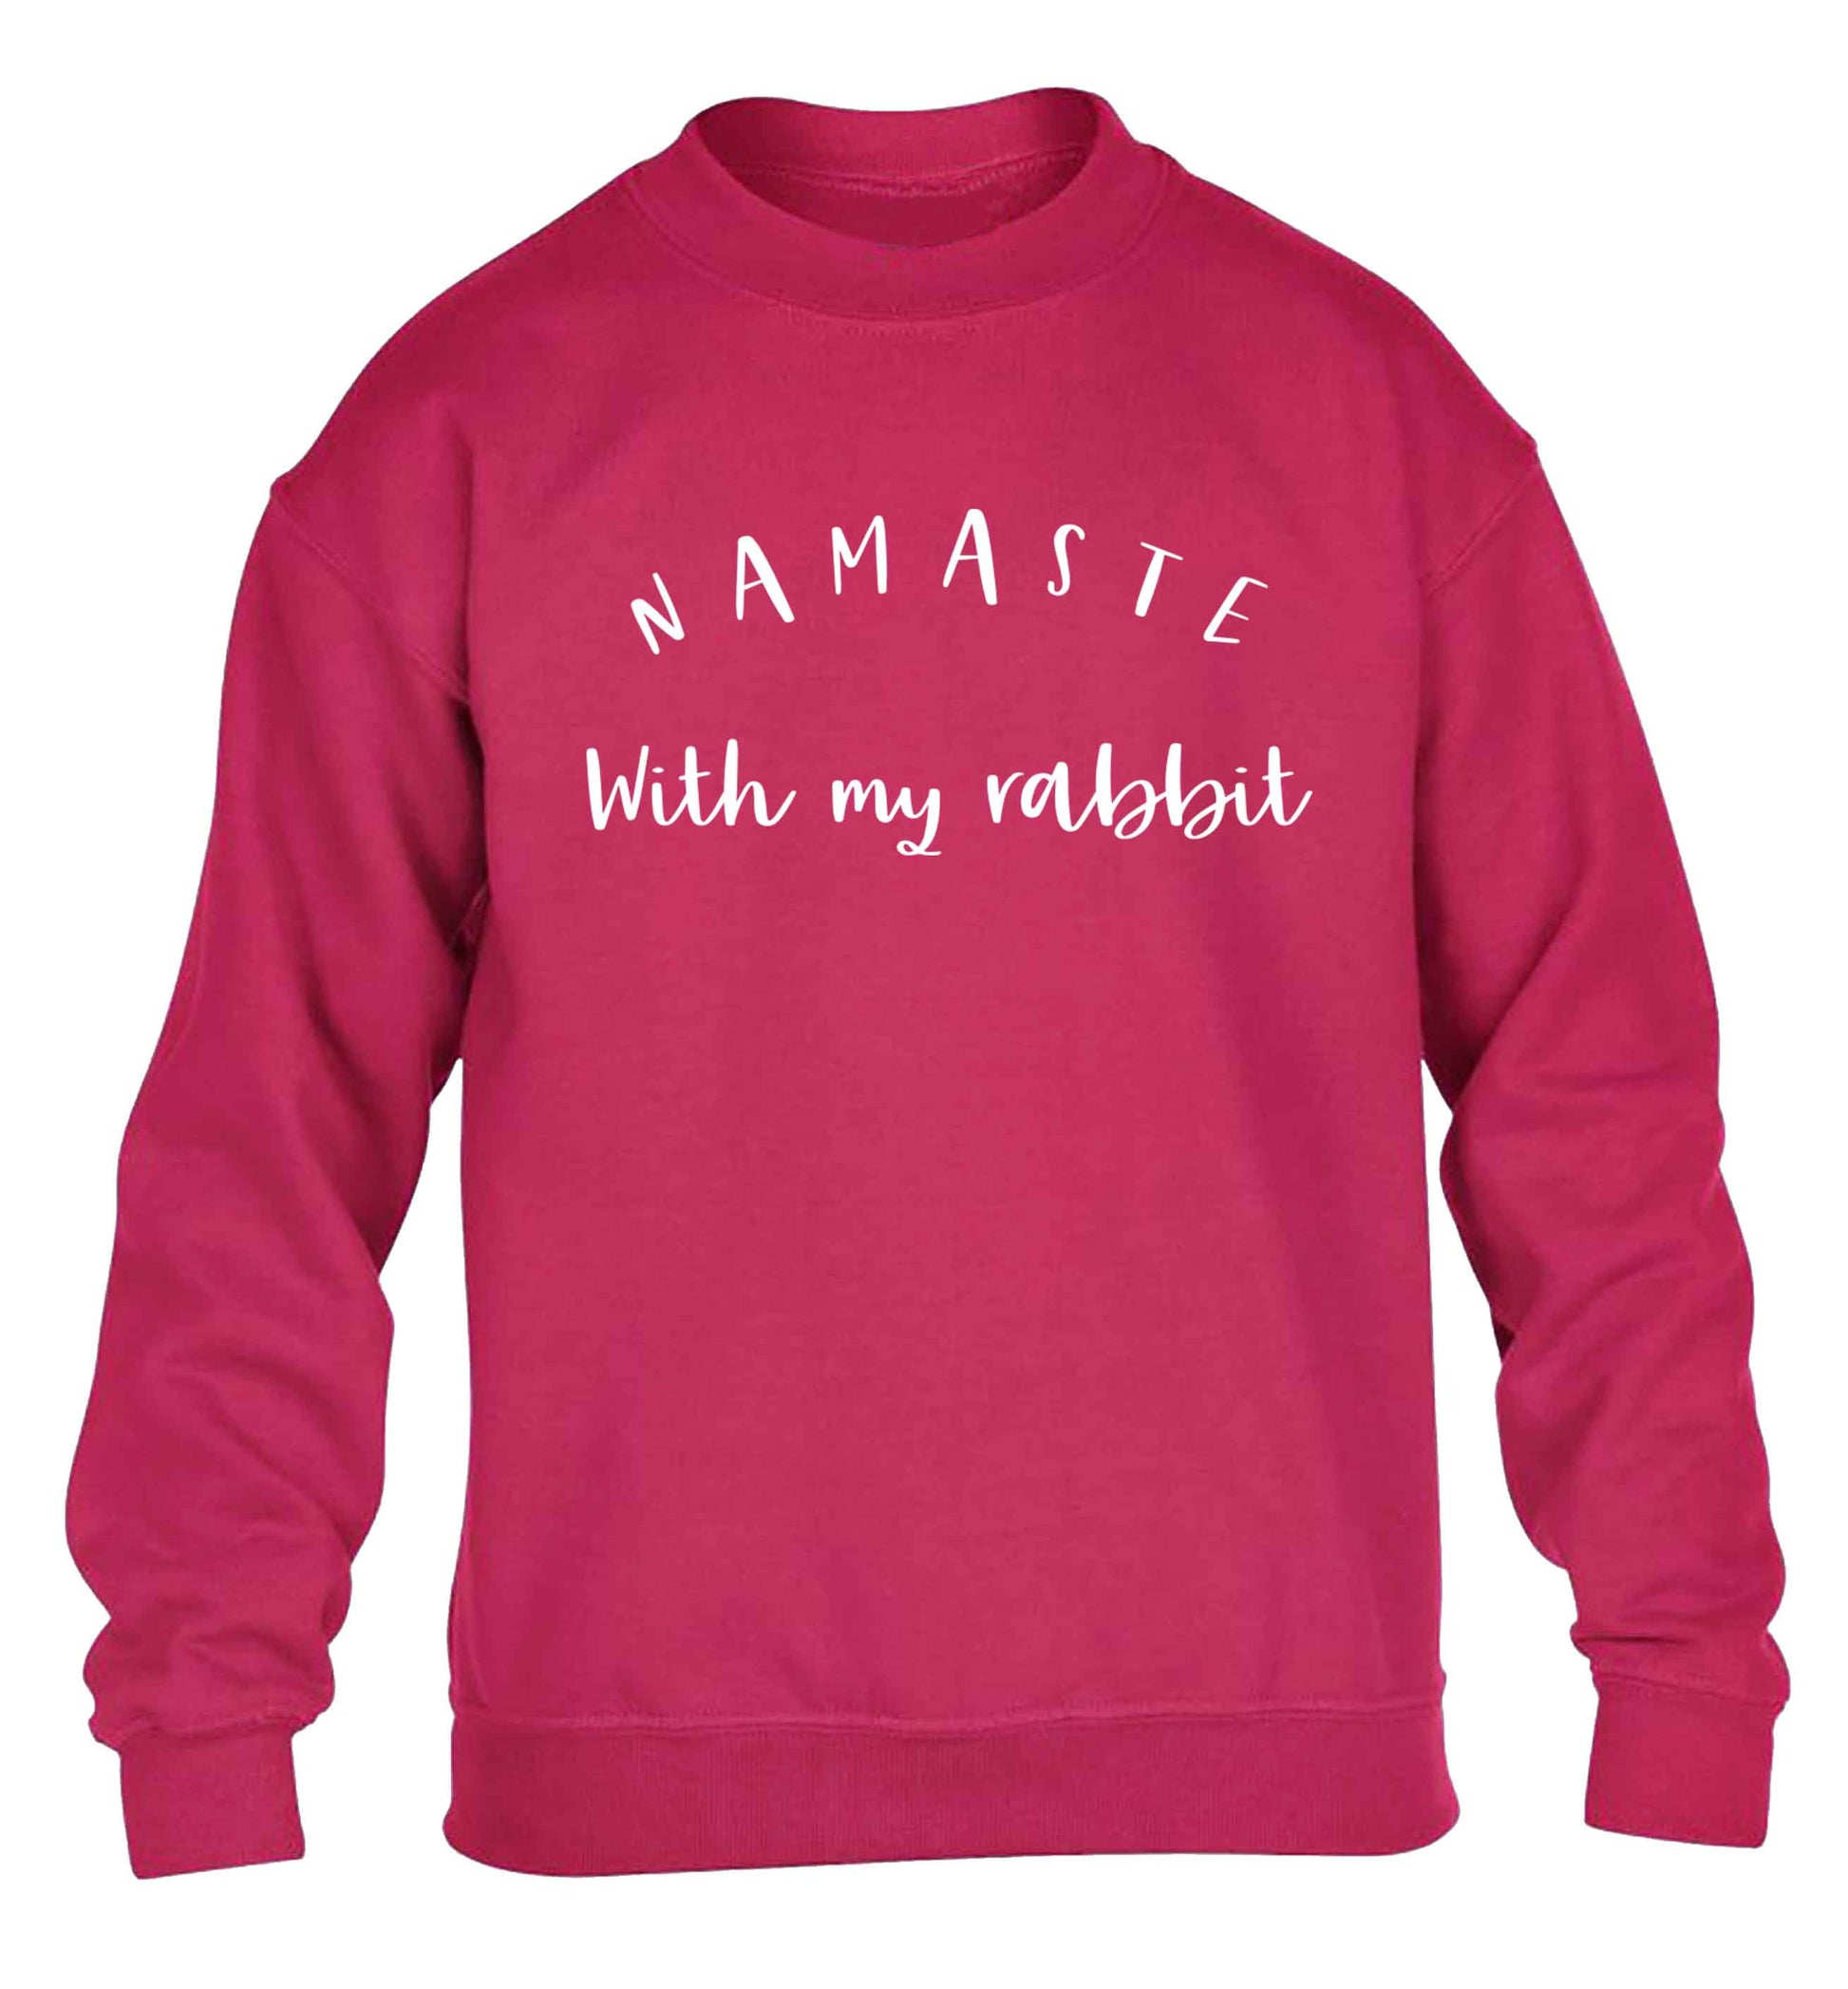 Namaste with my rabbit children's pink sweater 12-13 Years